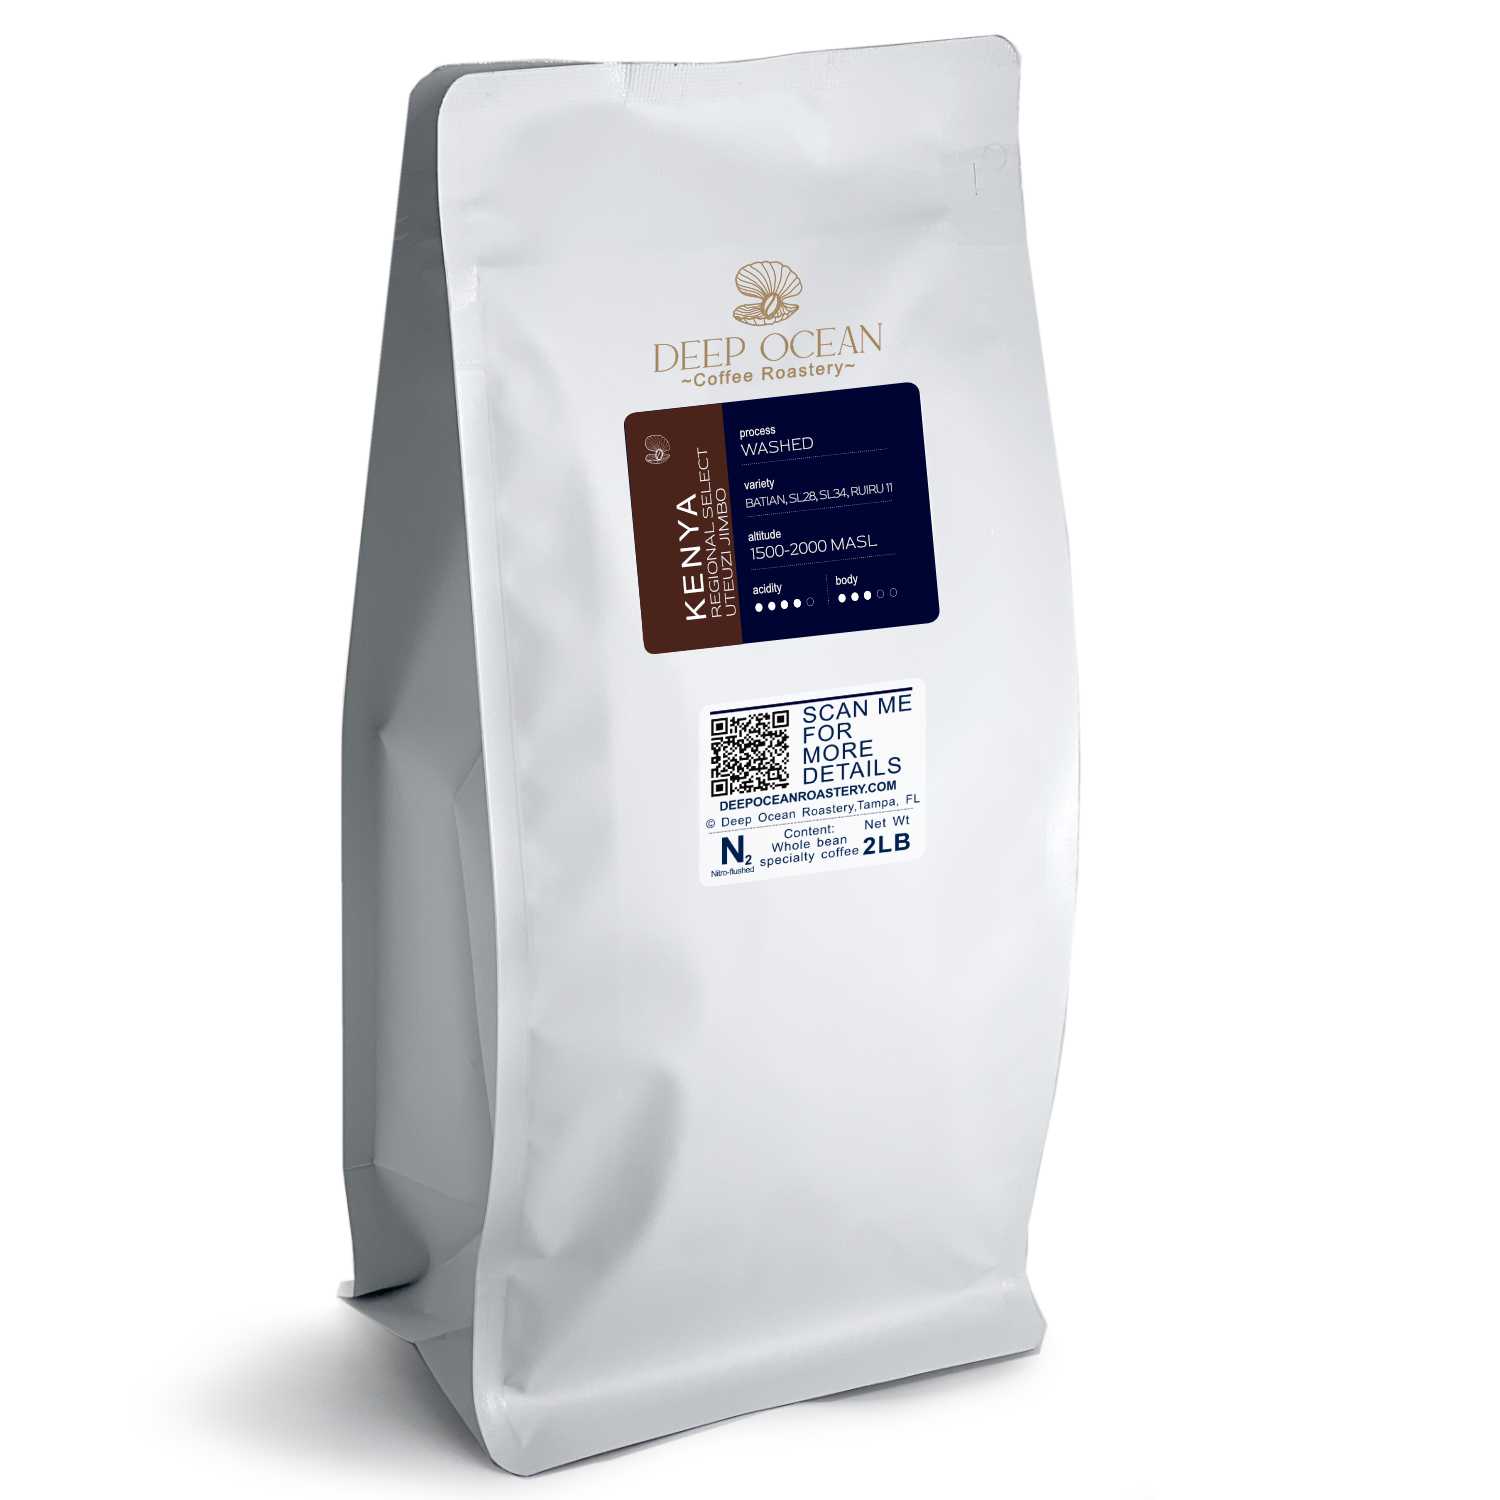 variant 1 - medium roasted coffee Kenya  is great choice of specialty coffee.